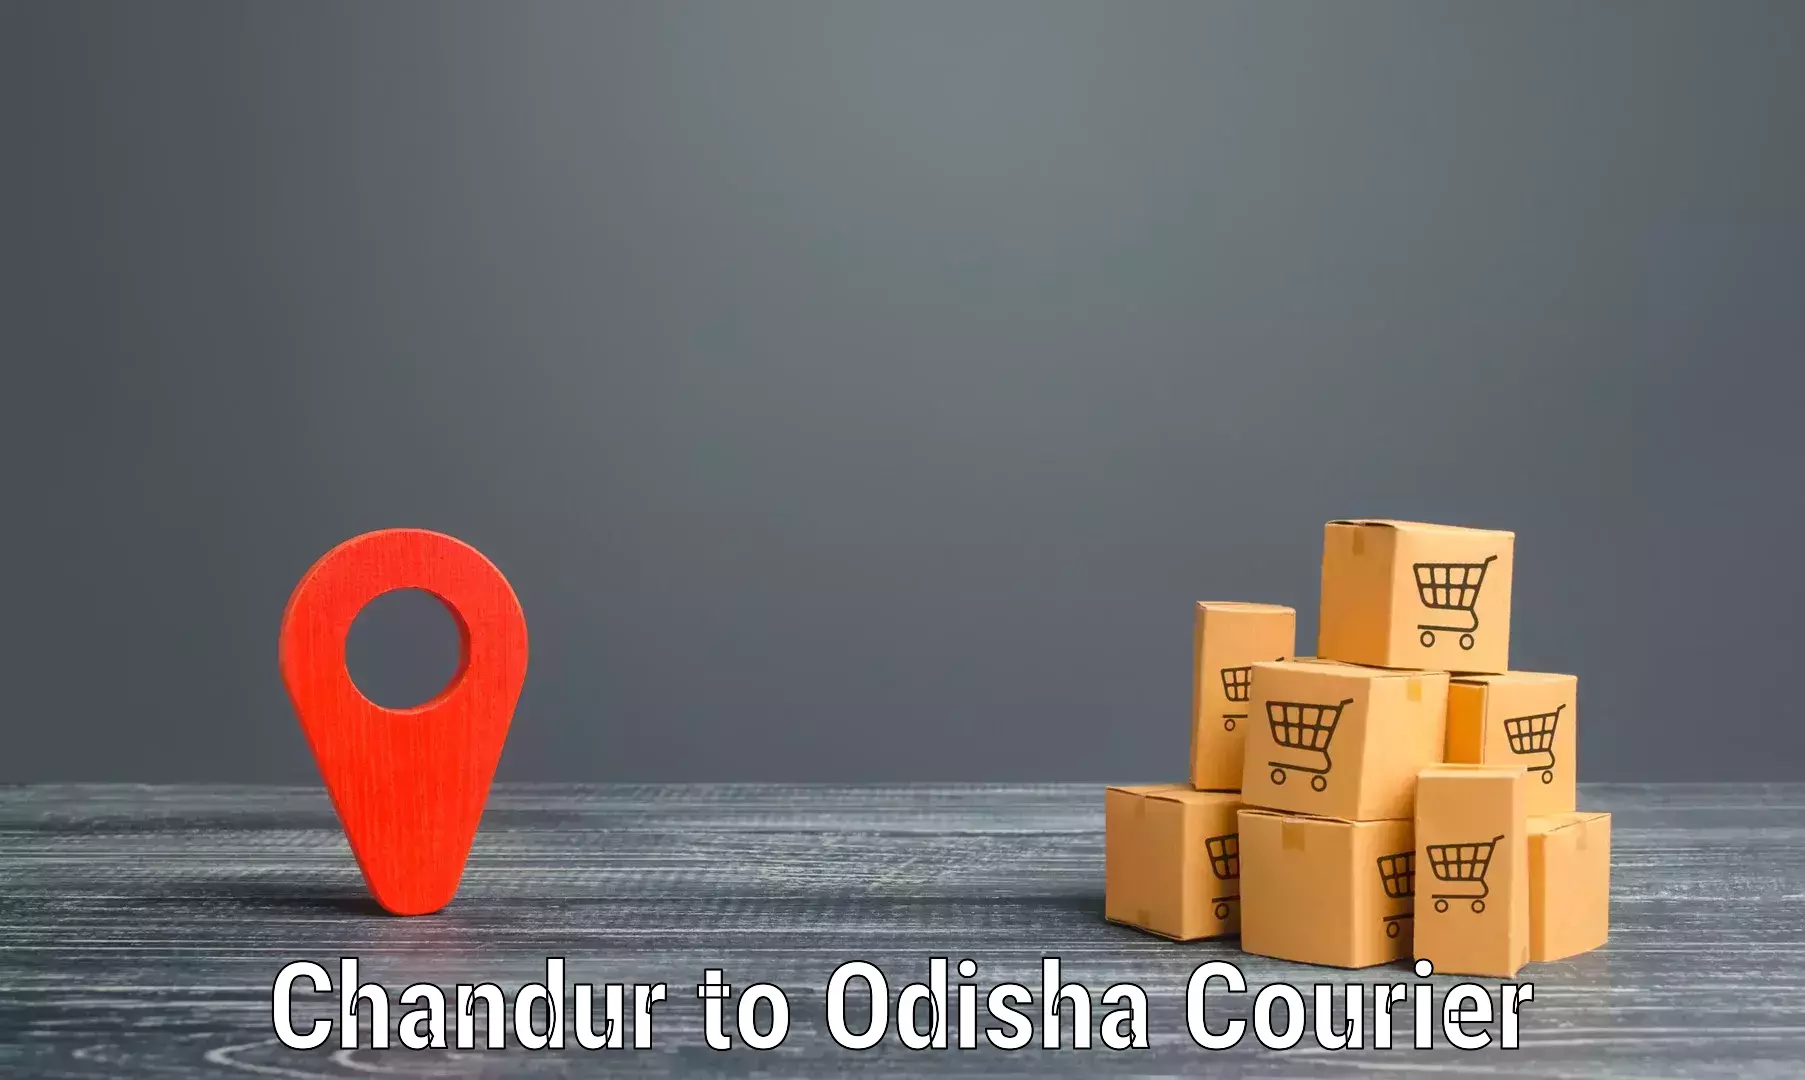 Courier service innovation Chandur to Basta